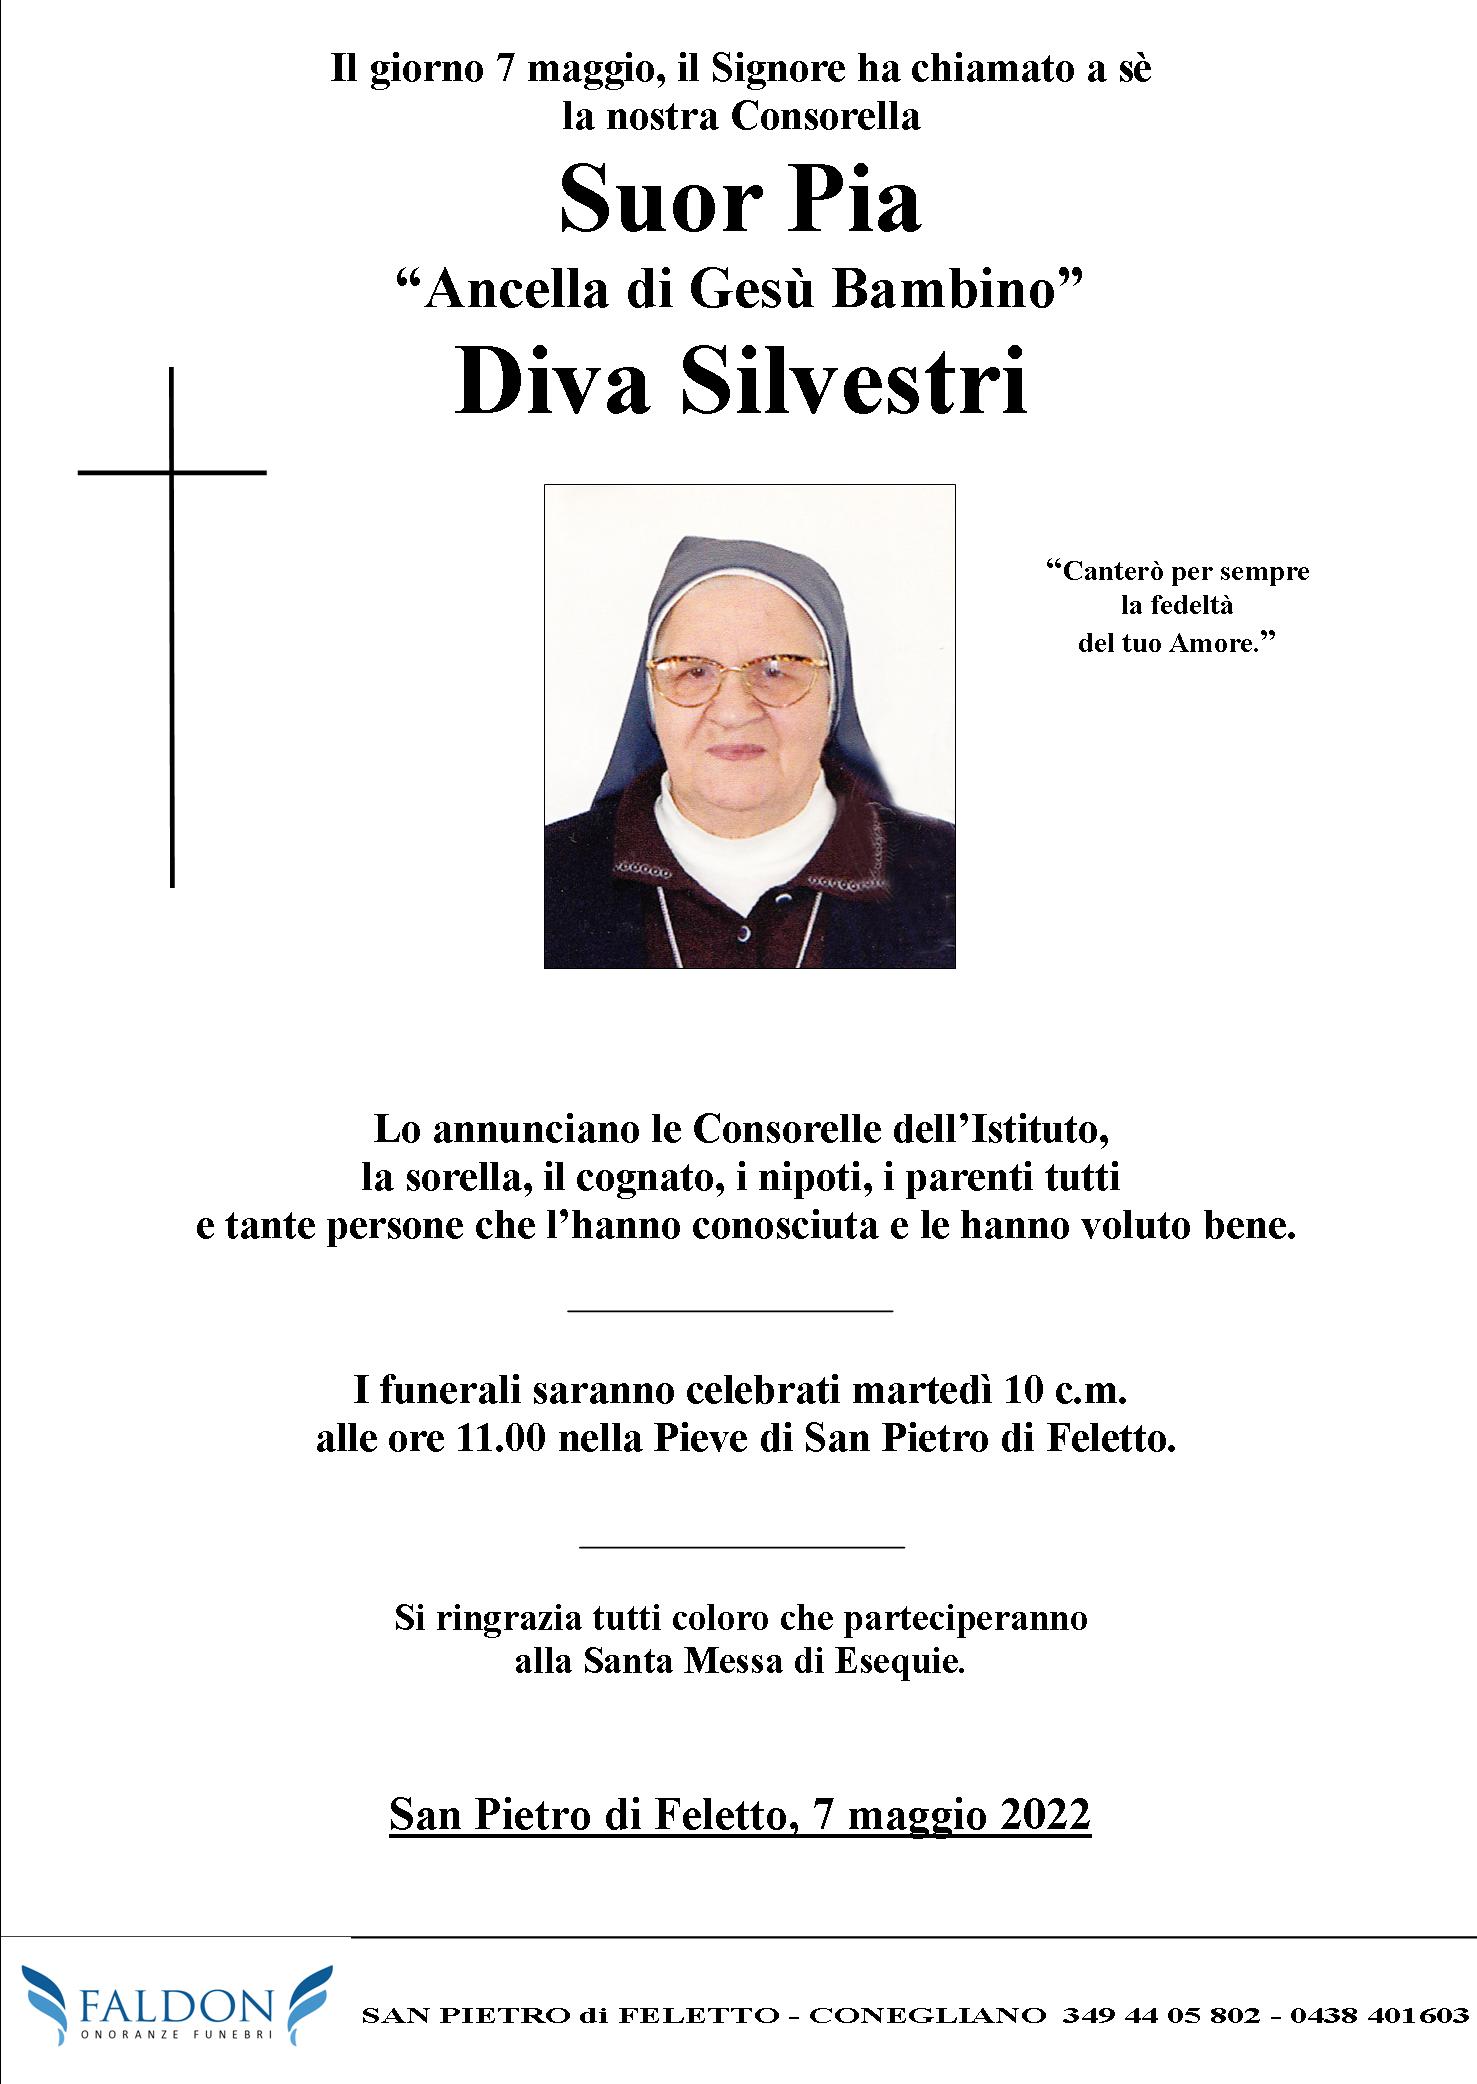 Diva Silvestri